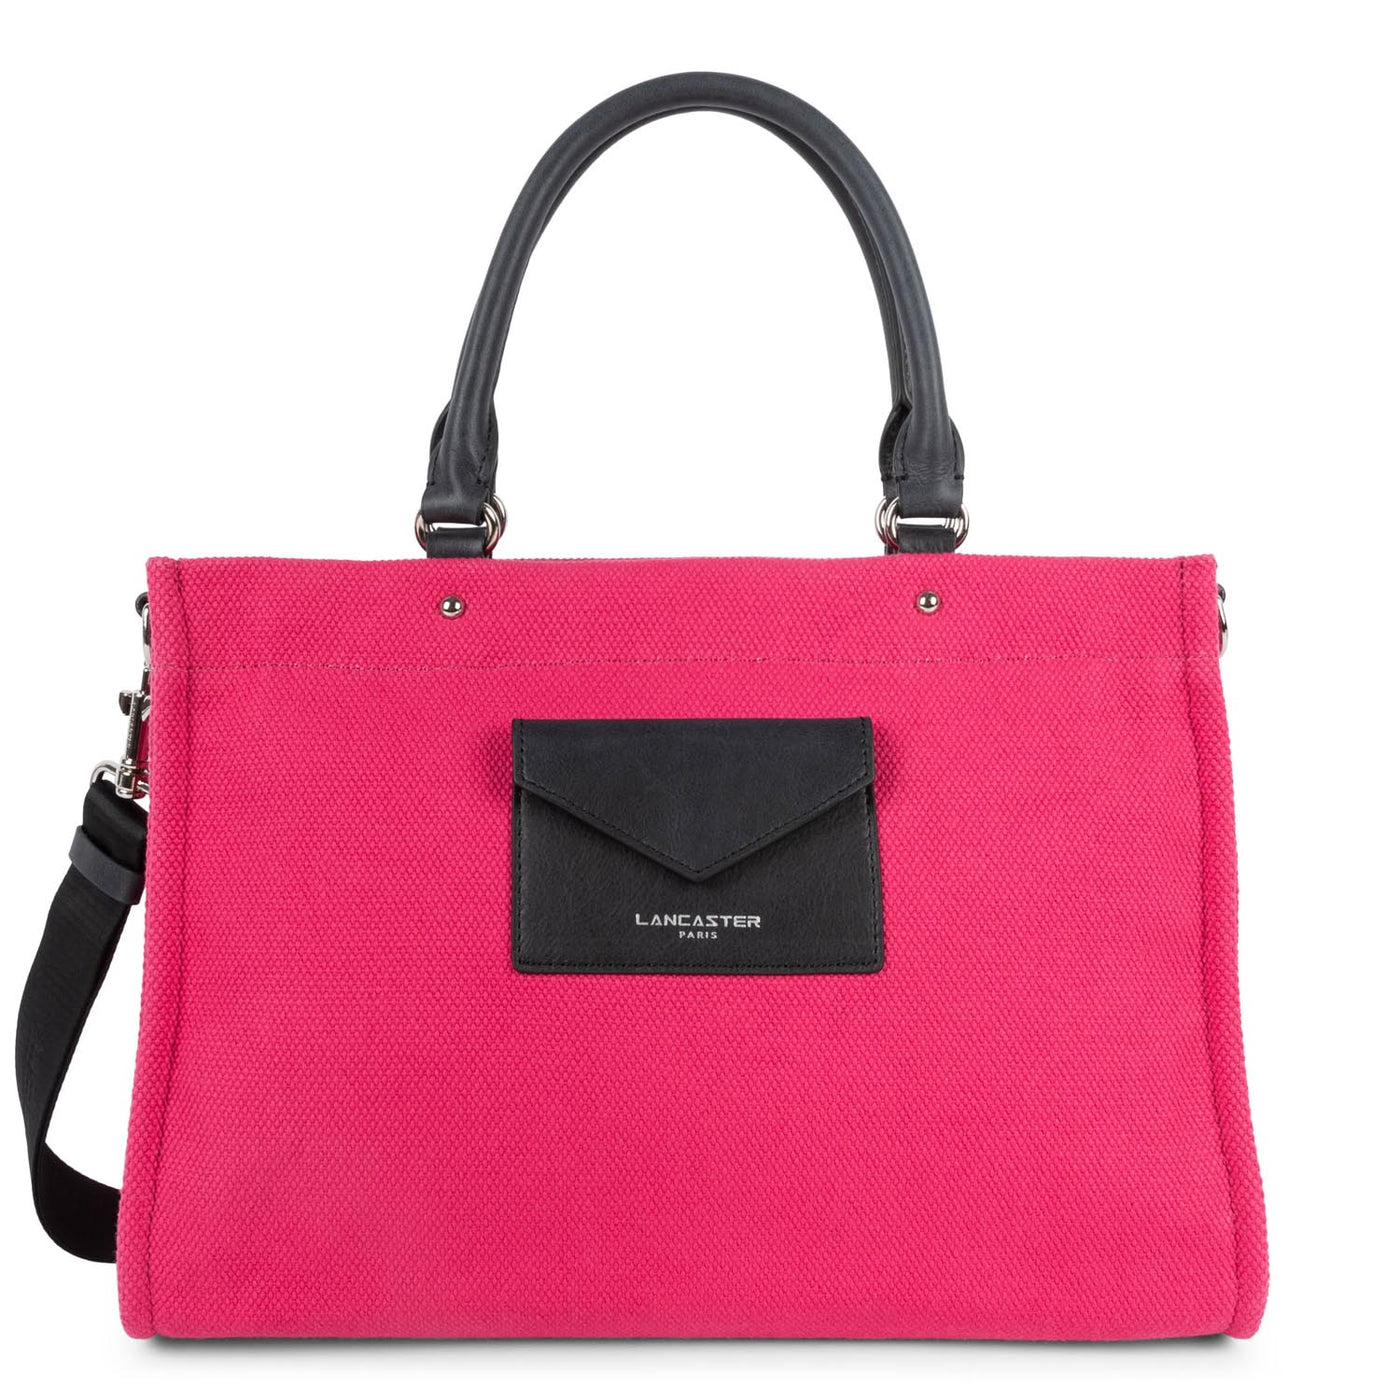 m handbag - canvas conscious #couleur_fuxia